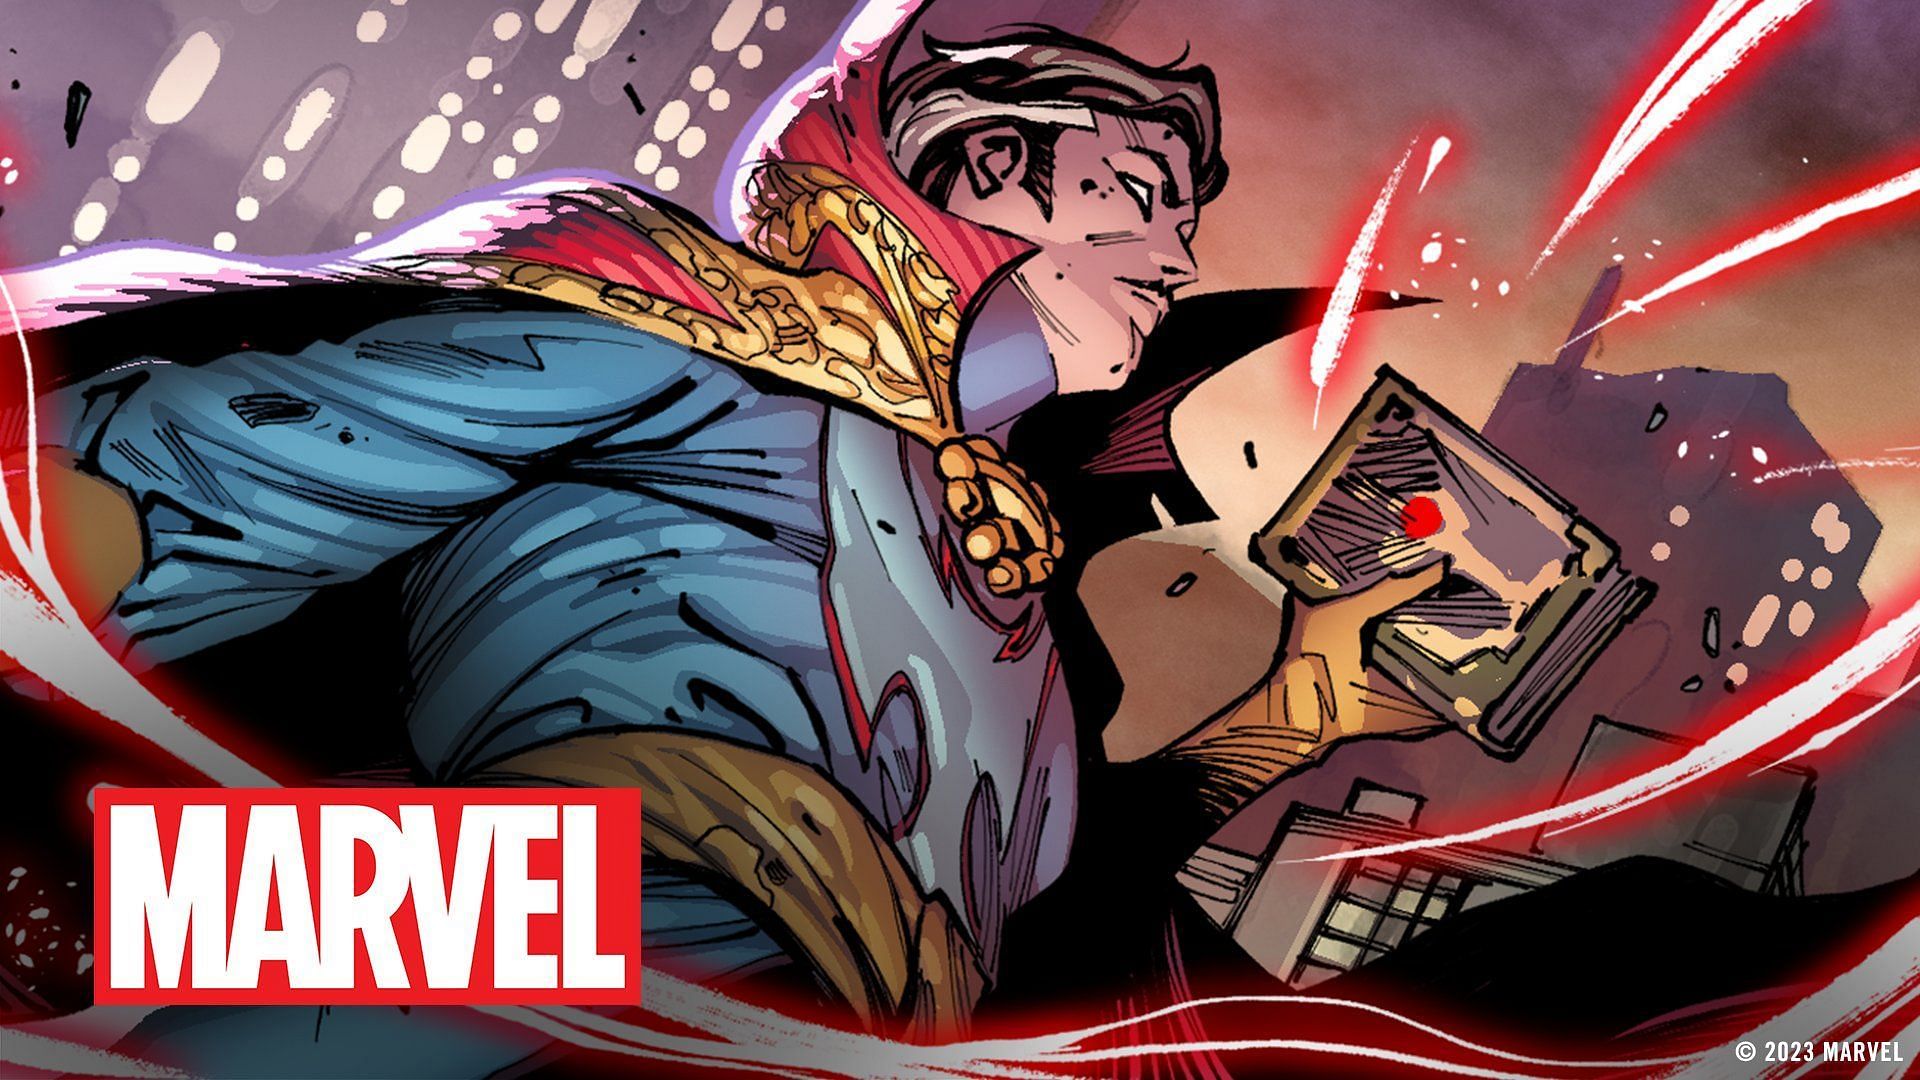 Doctor Strange (Image via Marvel Comics)